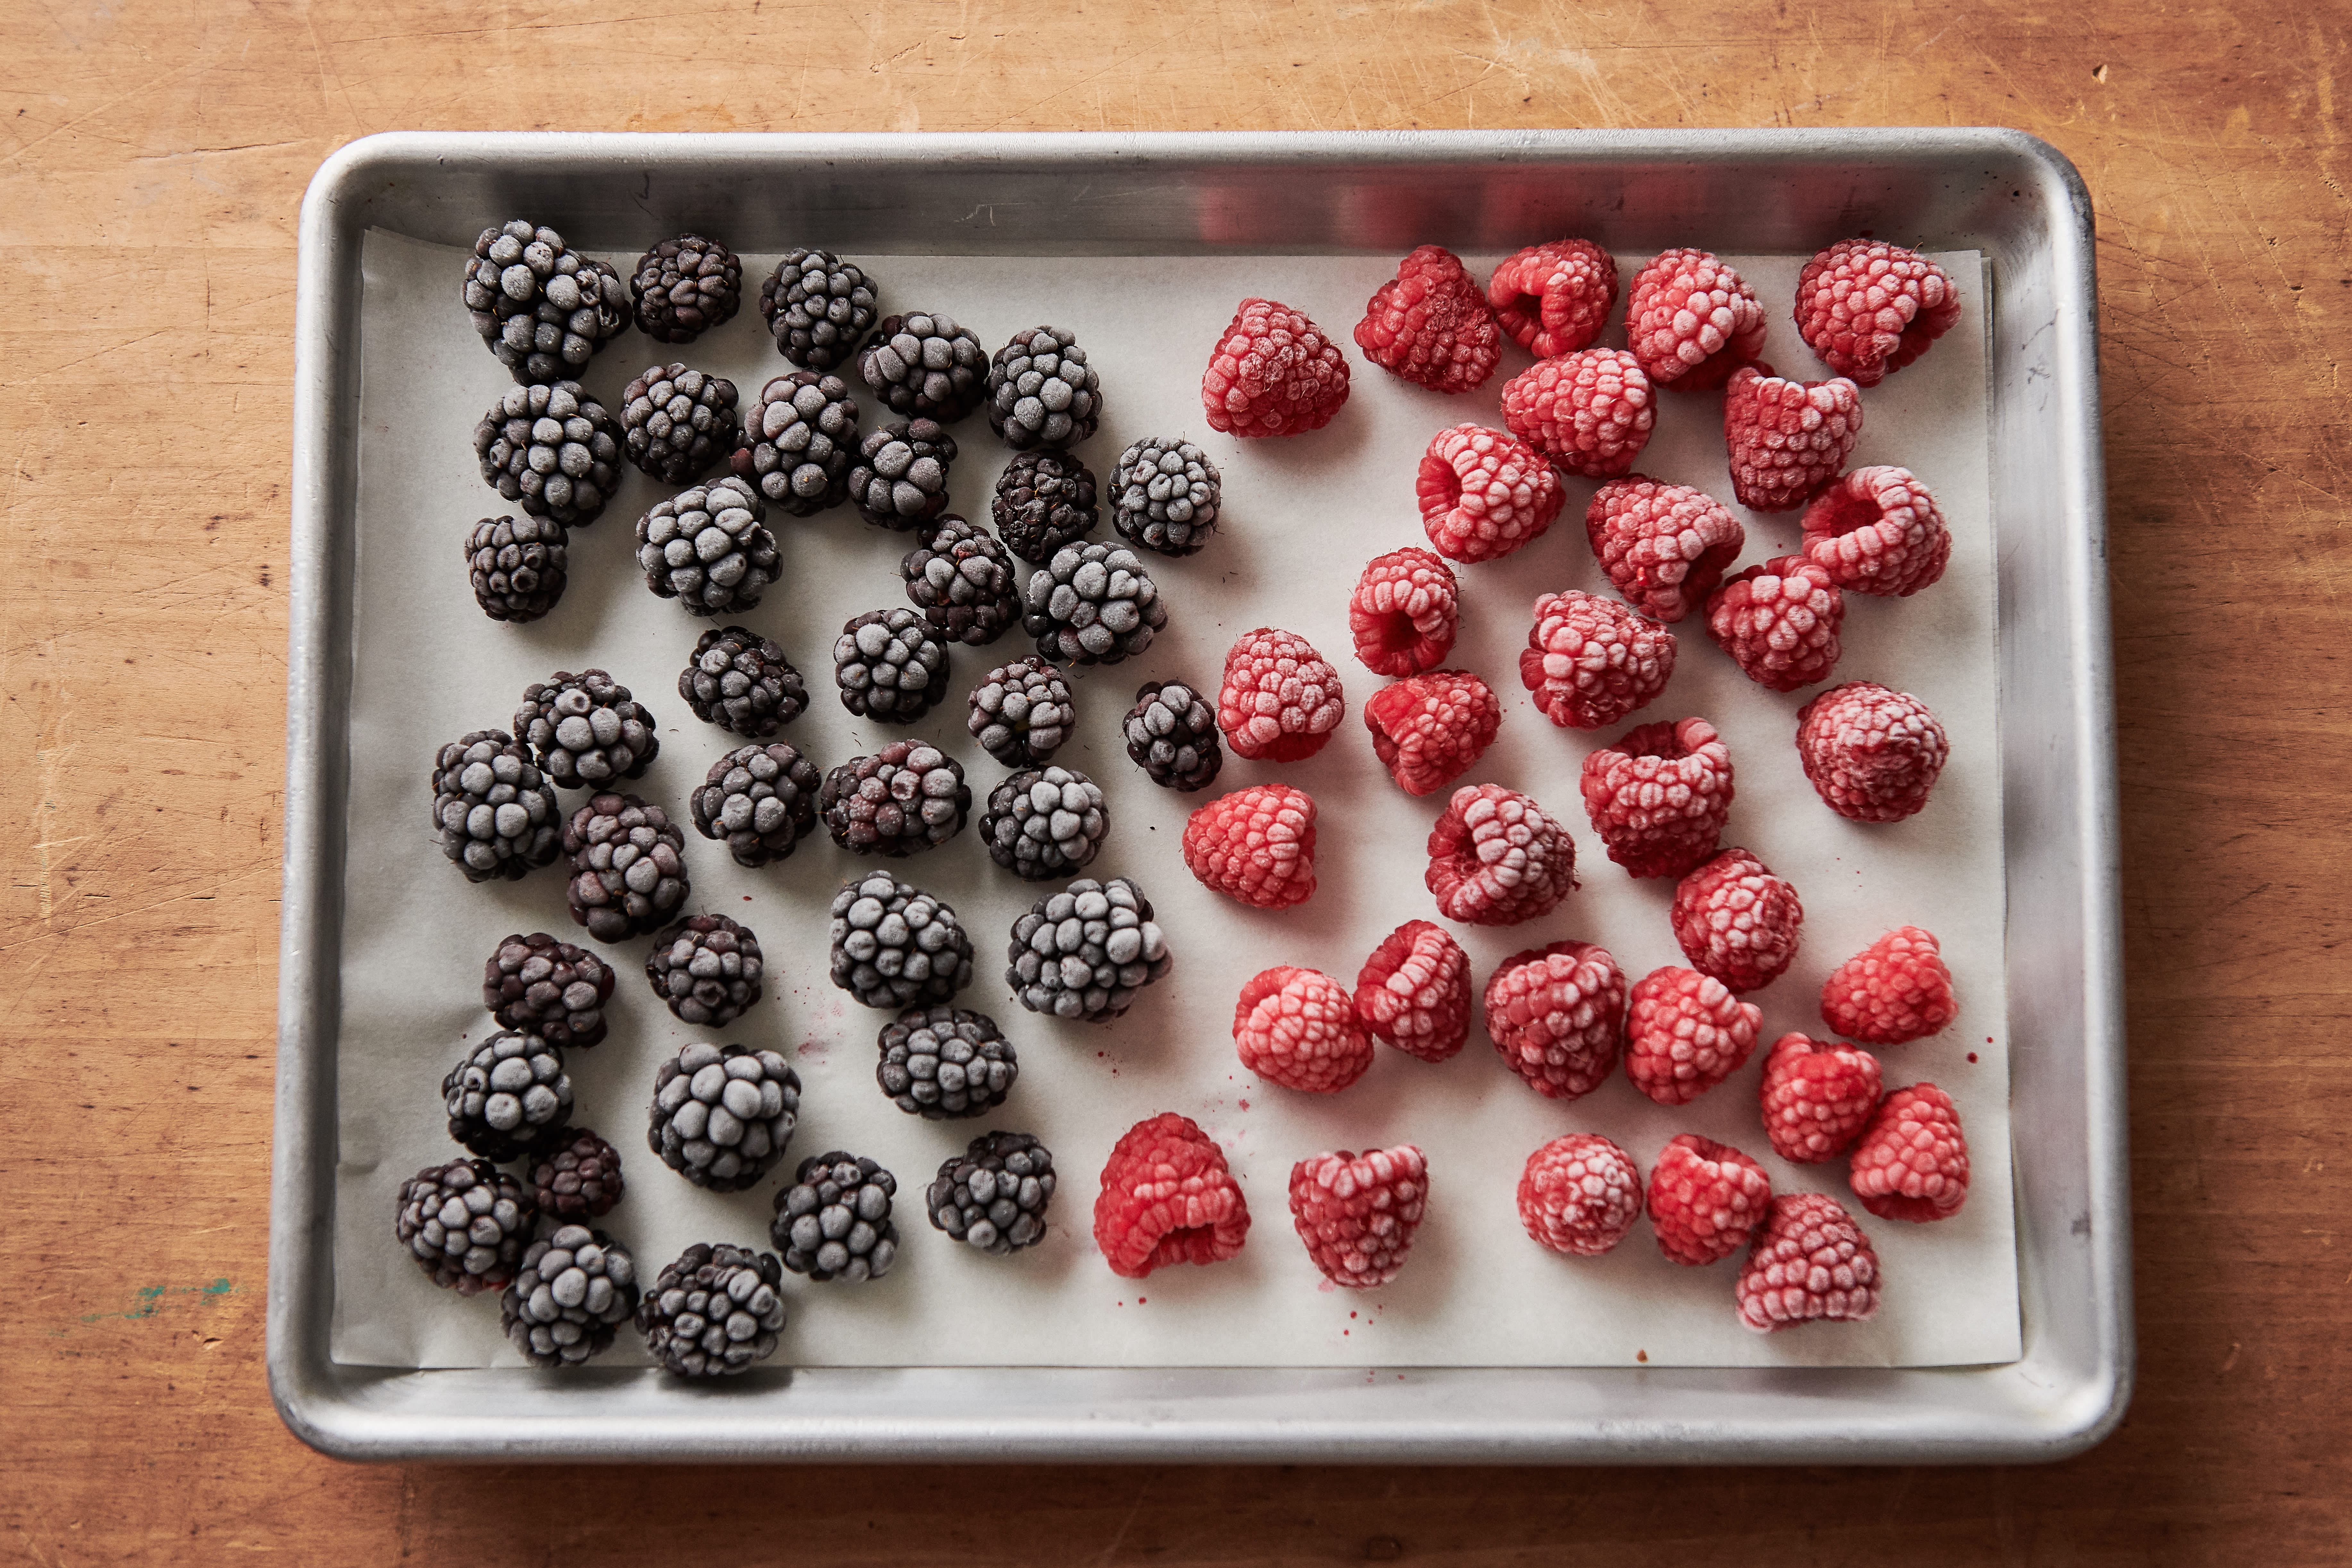 How To Prep & Freeze Fresh Fruit {step-by-step tutorial} » I LOVE VEGAN